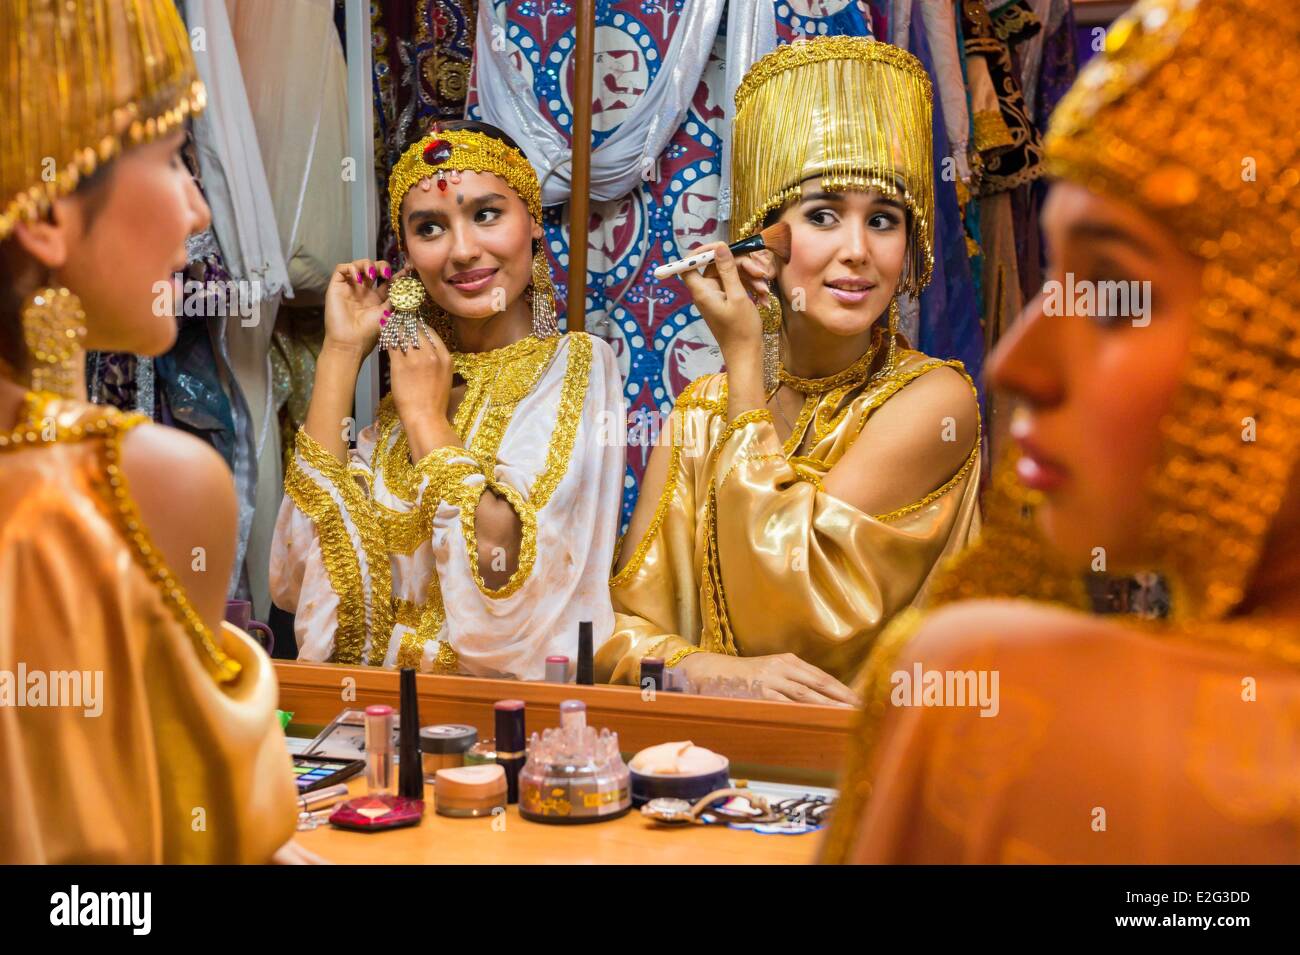 Uzbekistan Silk Road Samarkand El Merosi Theater dancer Kurbanova Mukhiba and Vakilova Saborat preparing themselves before the Stock Photo